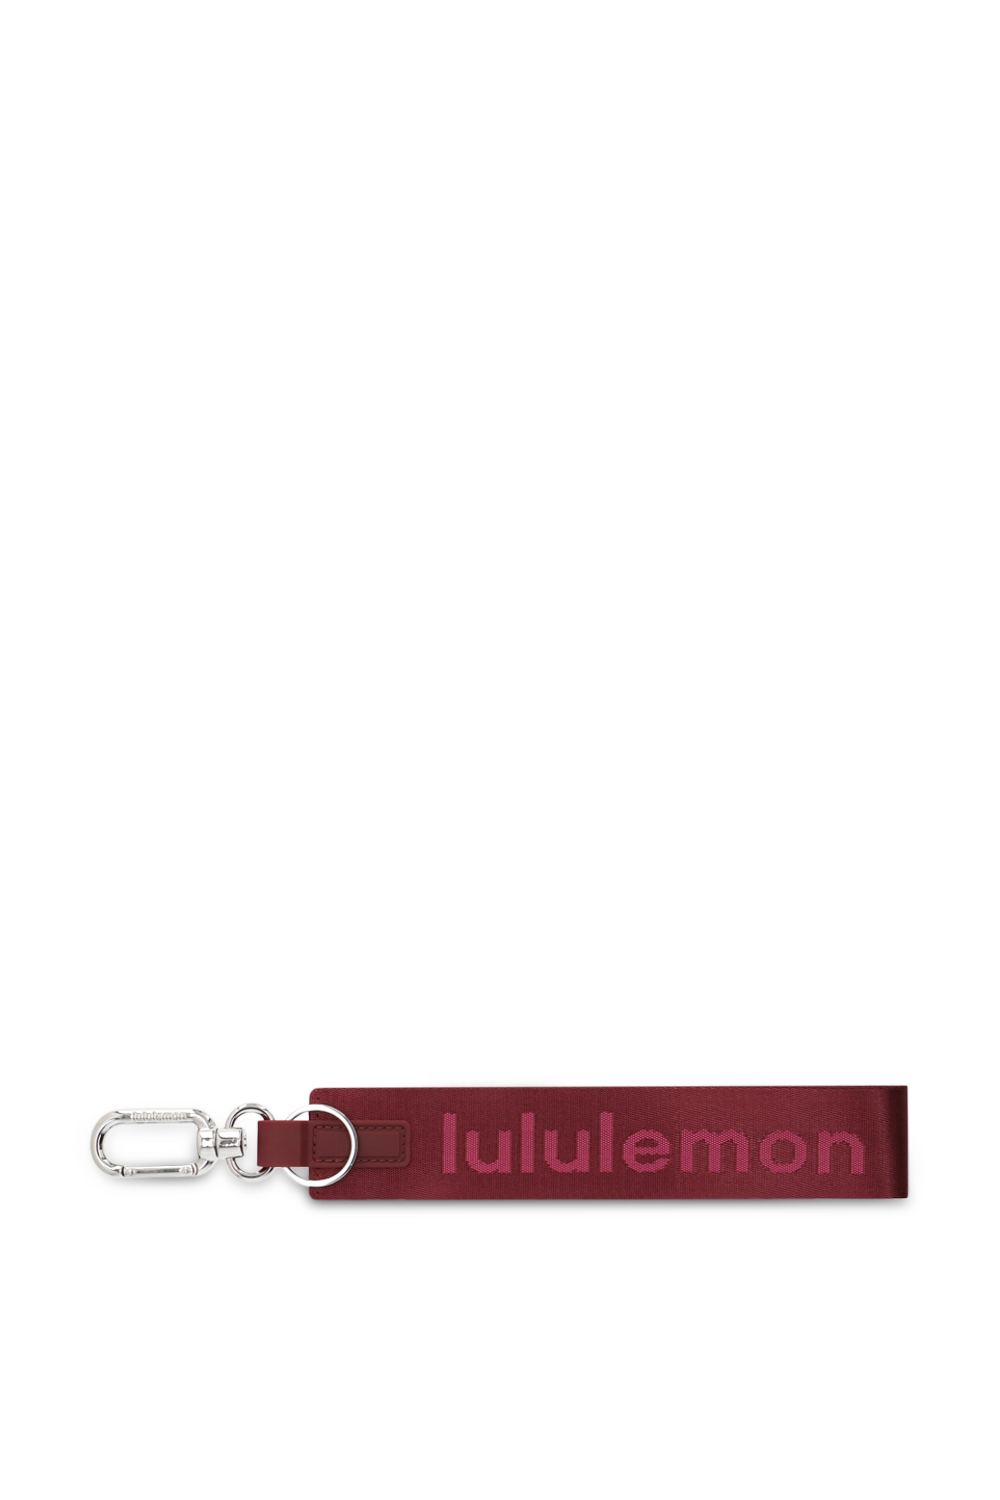 Never Lost Keychain LULULEMON